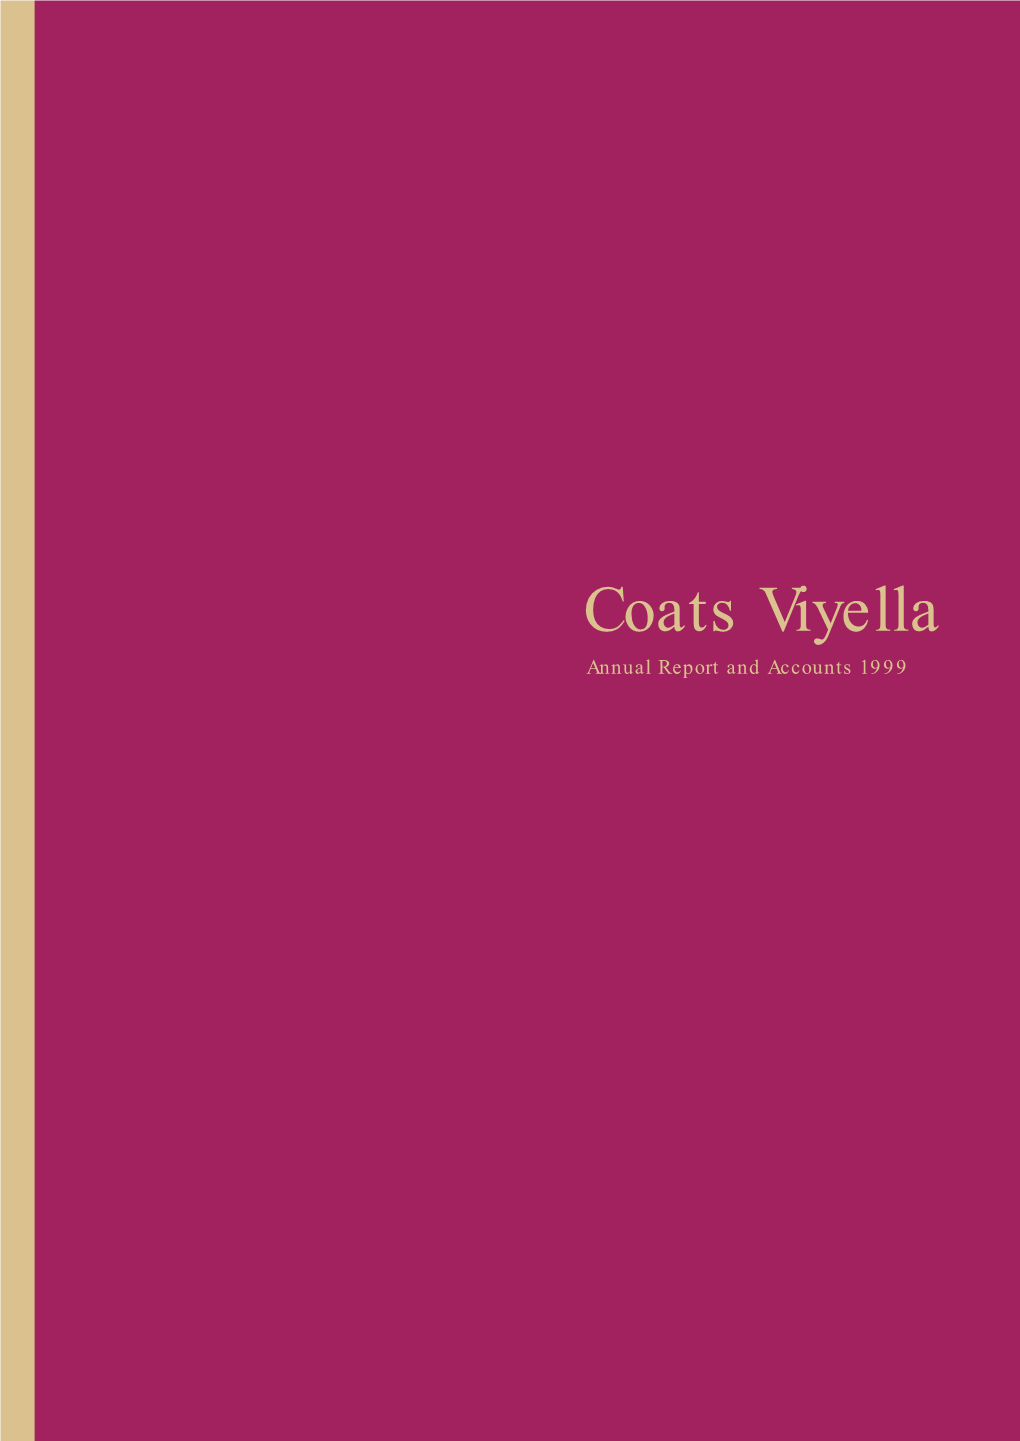 Coats Viyella Annual Report and Accounts 1999 Financial Highlights